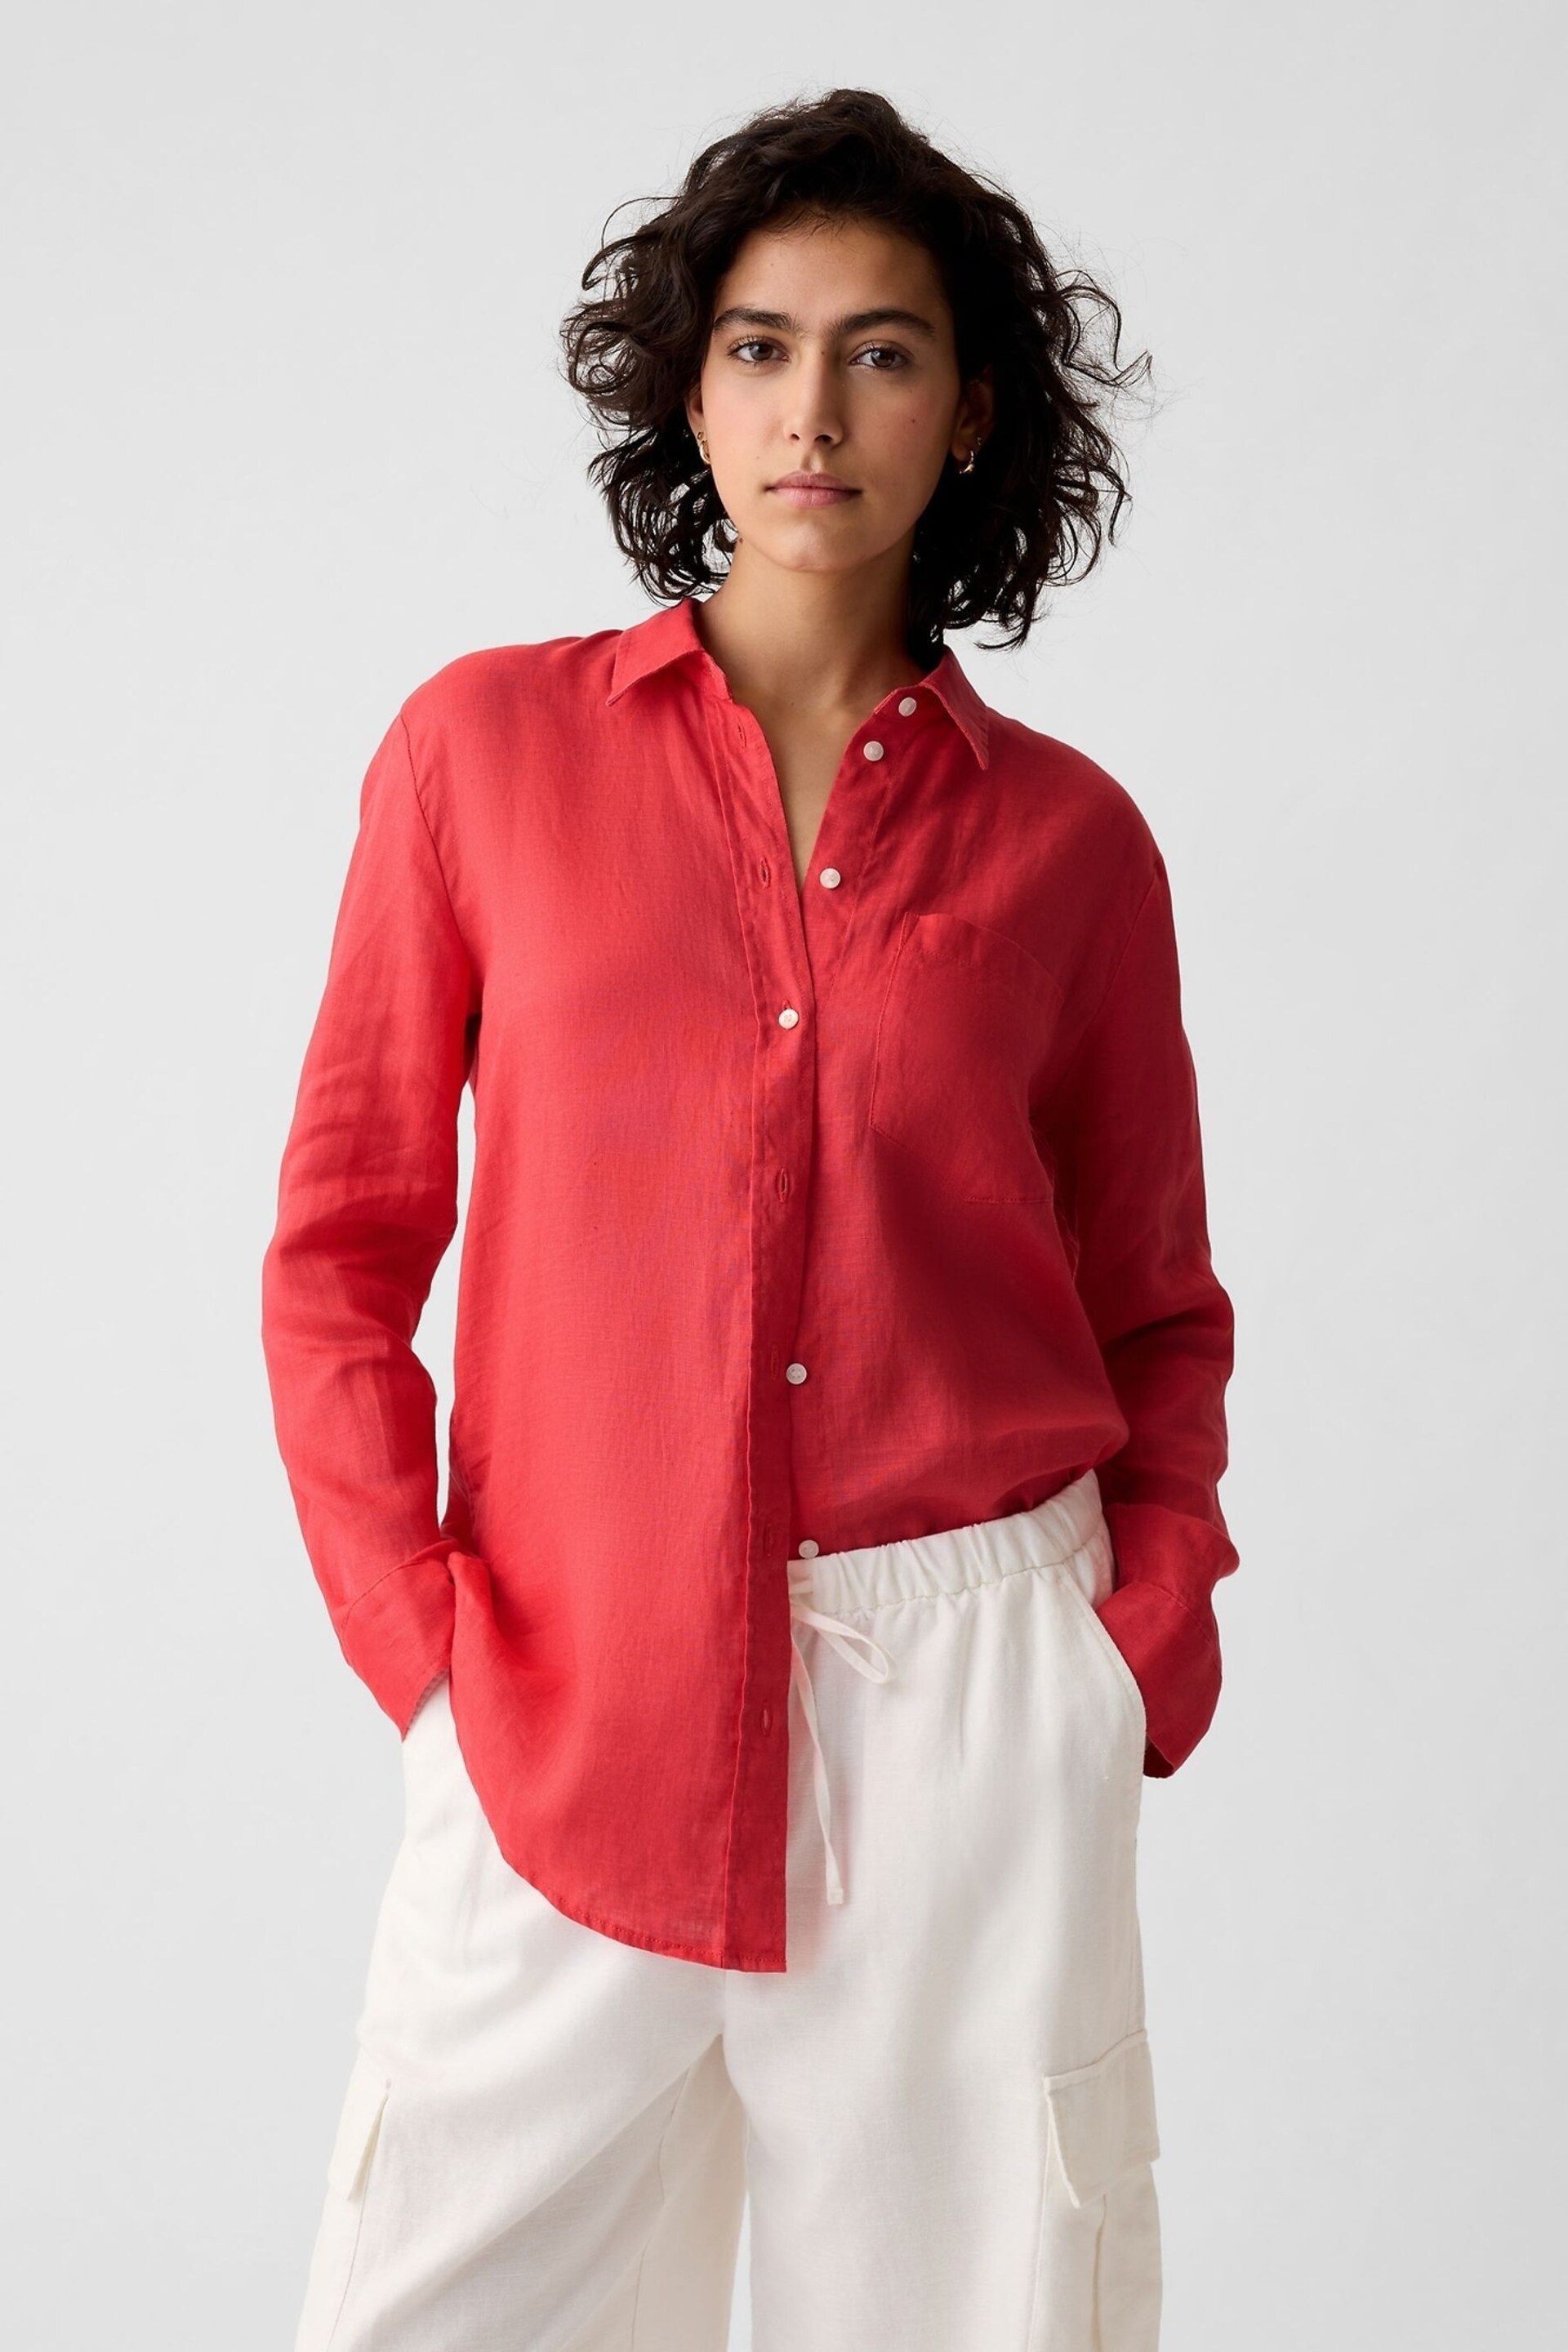 Gap Red 100% Linen Long Sleeve Oversized Shirt - Image 1 of 4